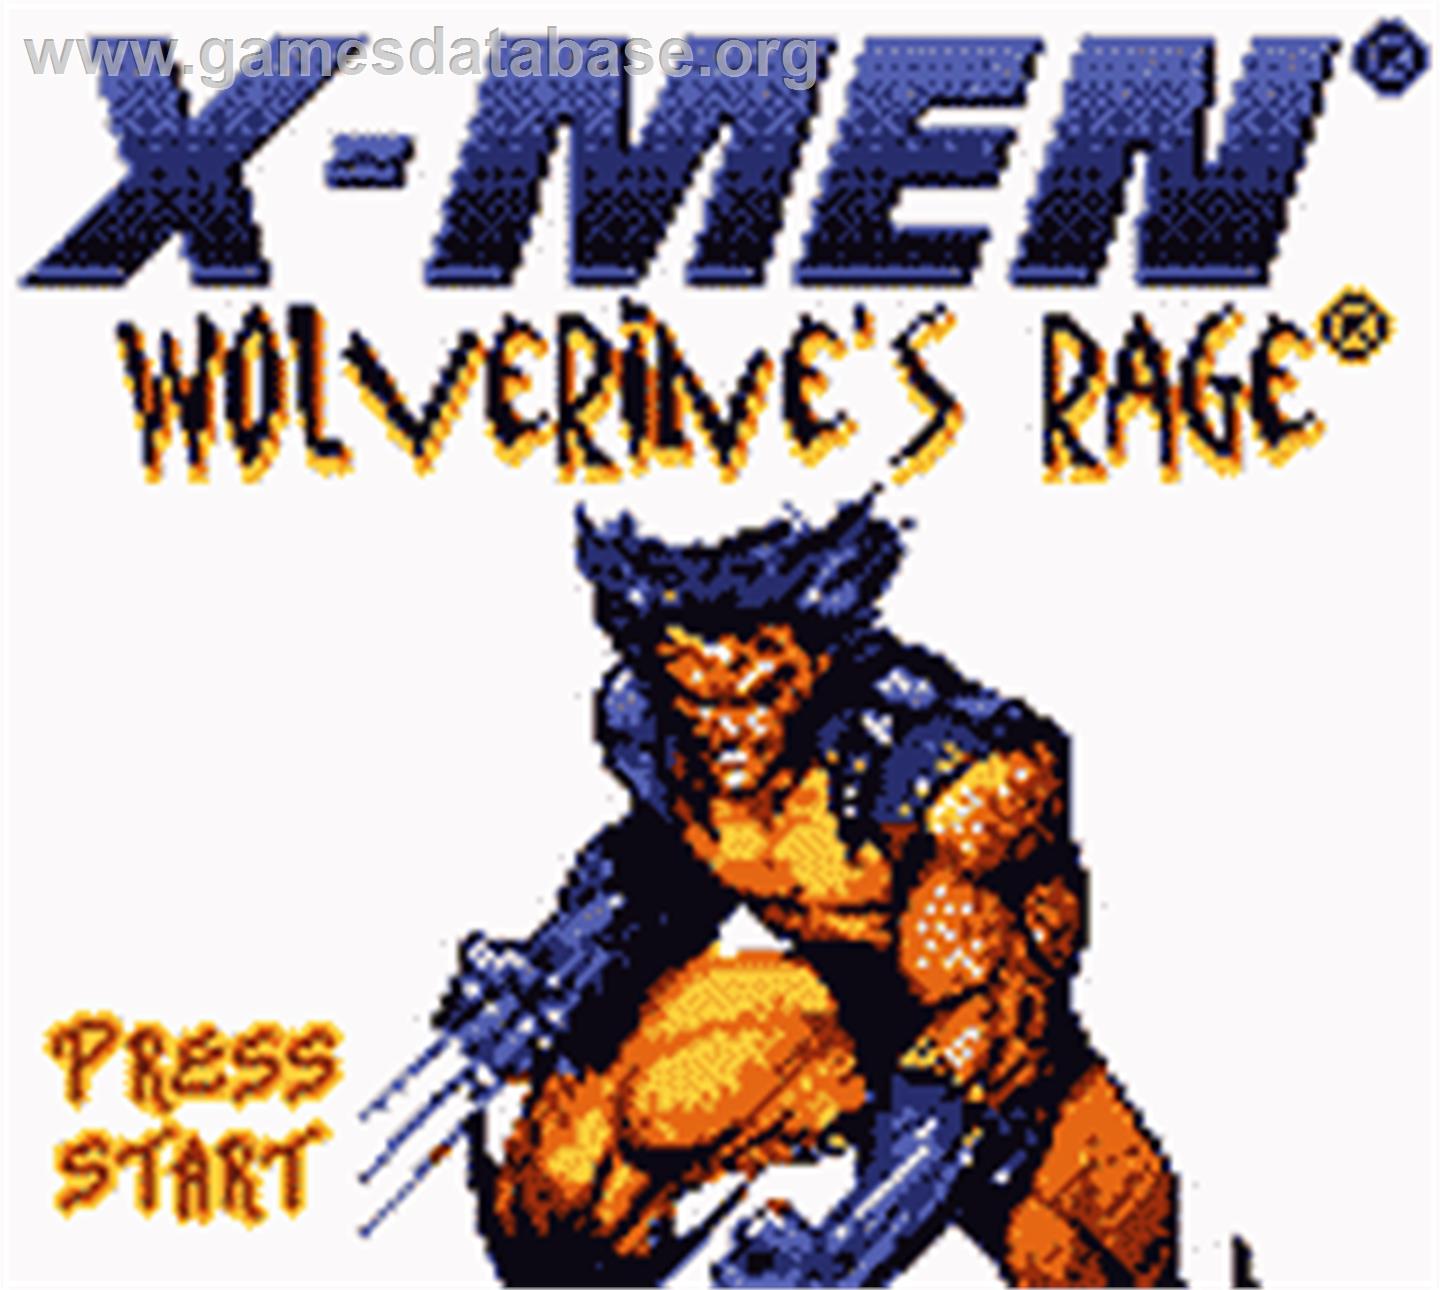 X-Men: Wolverine's Rage - Nintendo Game Boy Color - Artwork - Title Screen